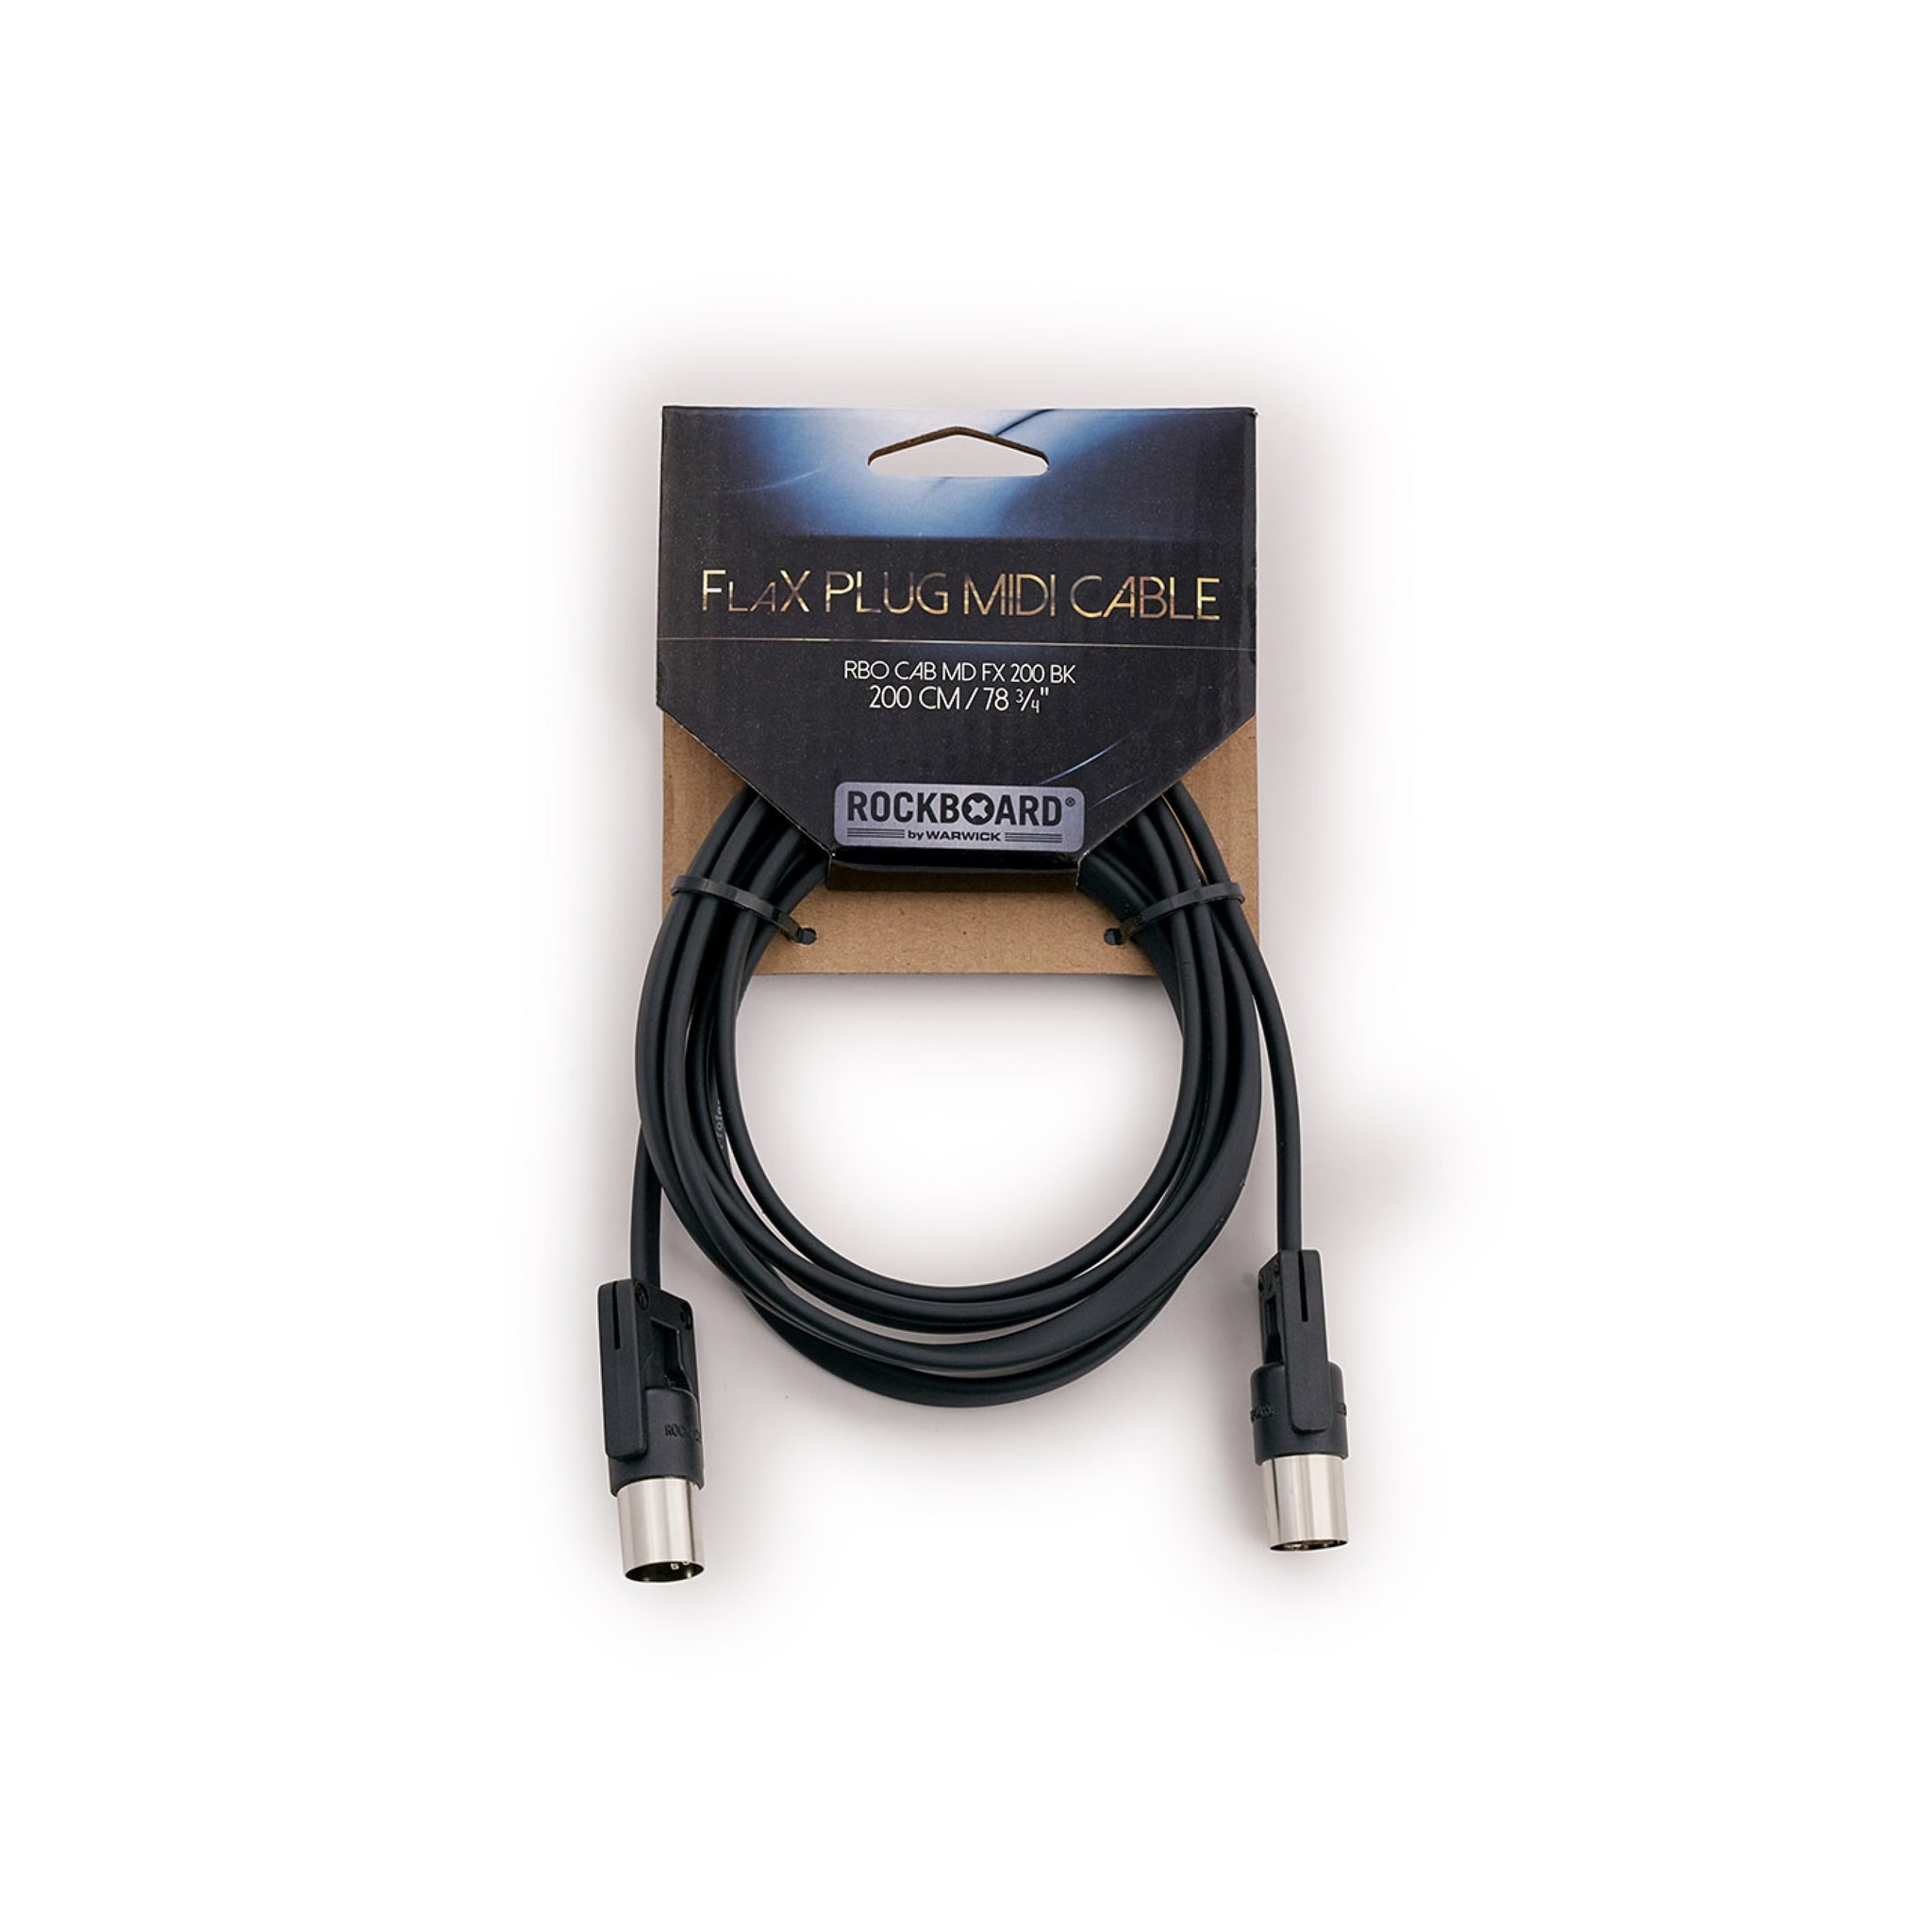 RockBoard FlaX Plug 200cm (6.56') flat MIDI Cable - angle or straight (RBO CAB MD FX 200 BK)